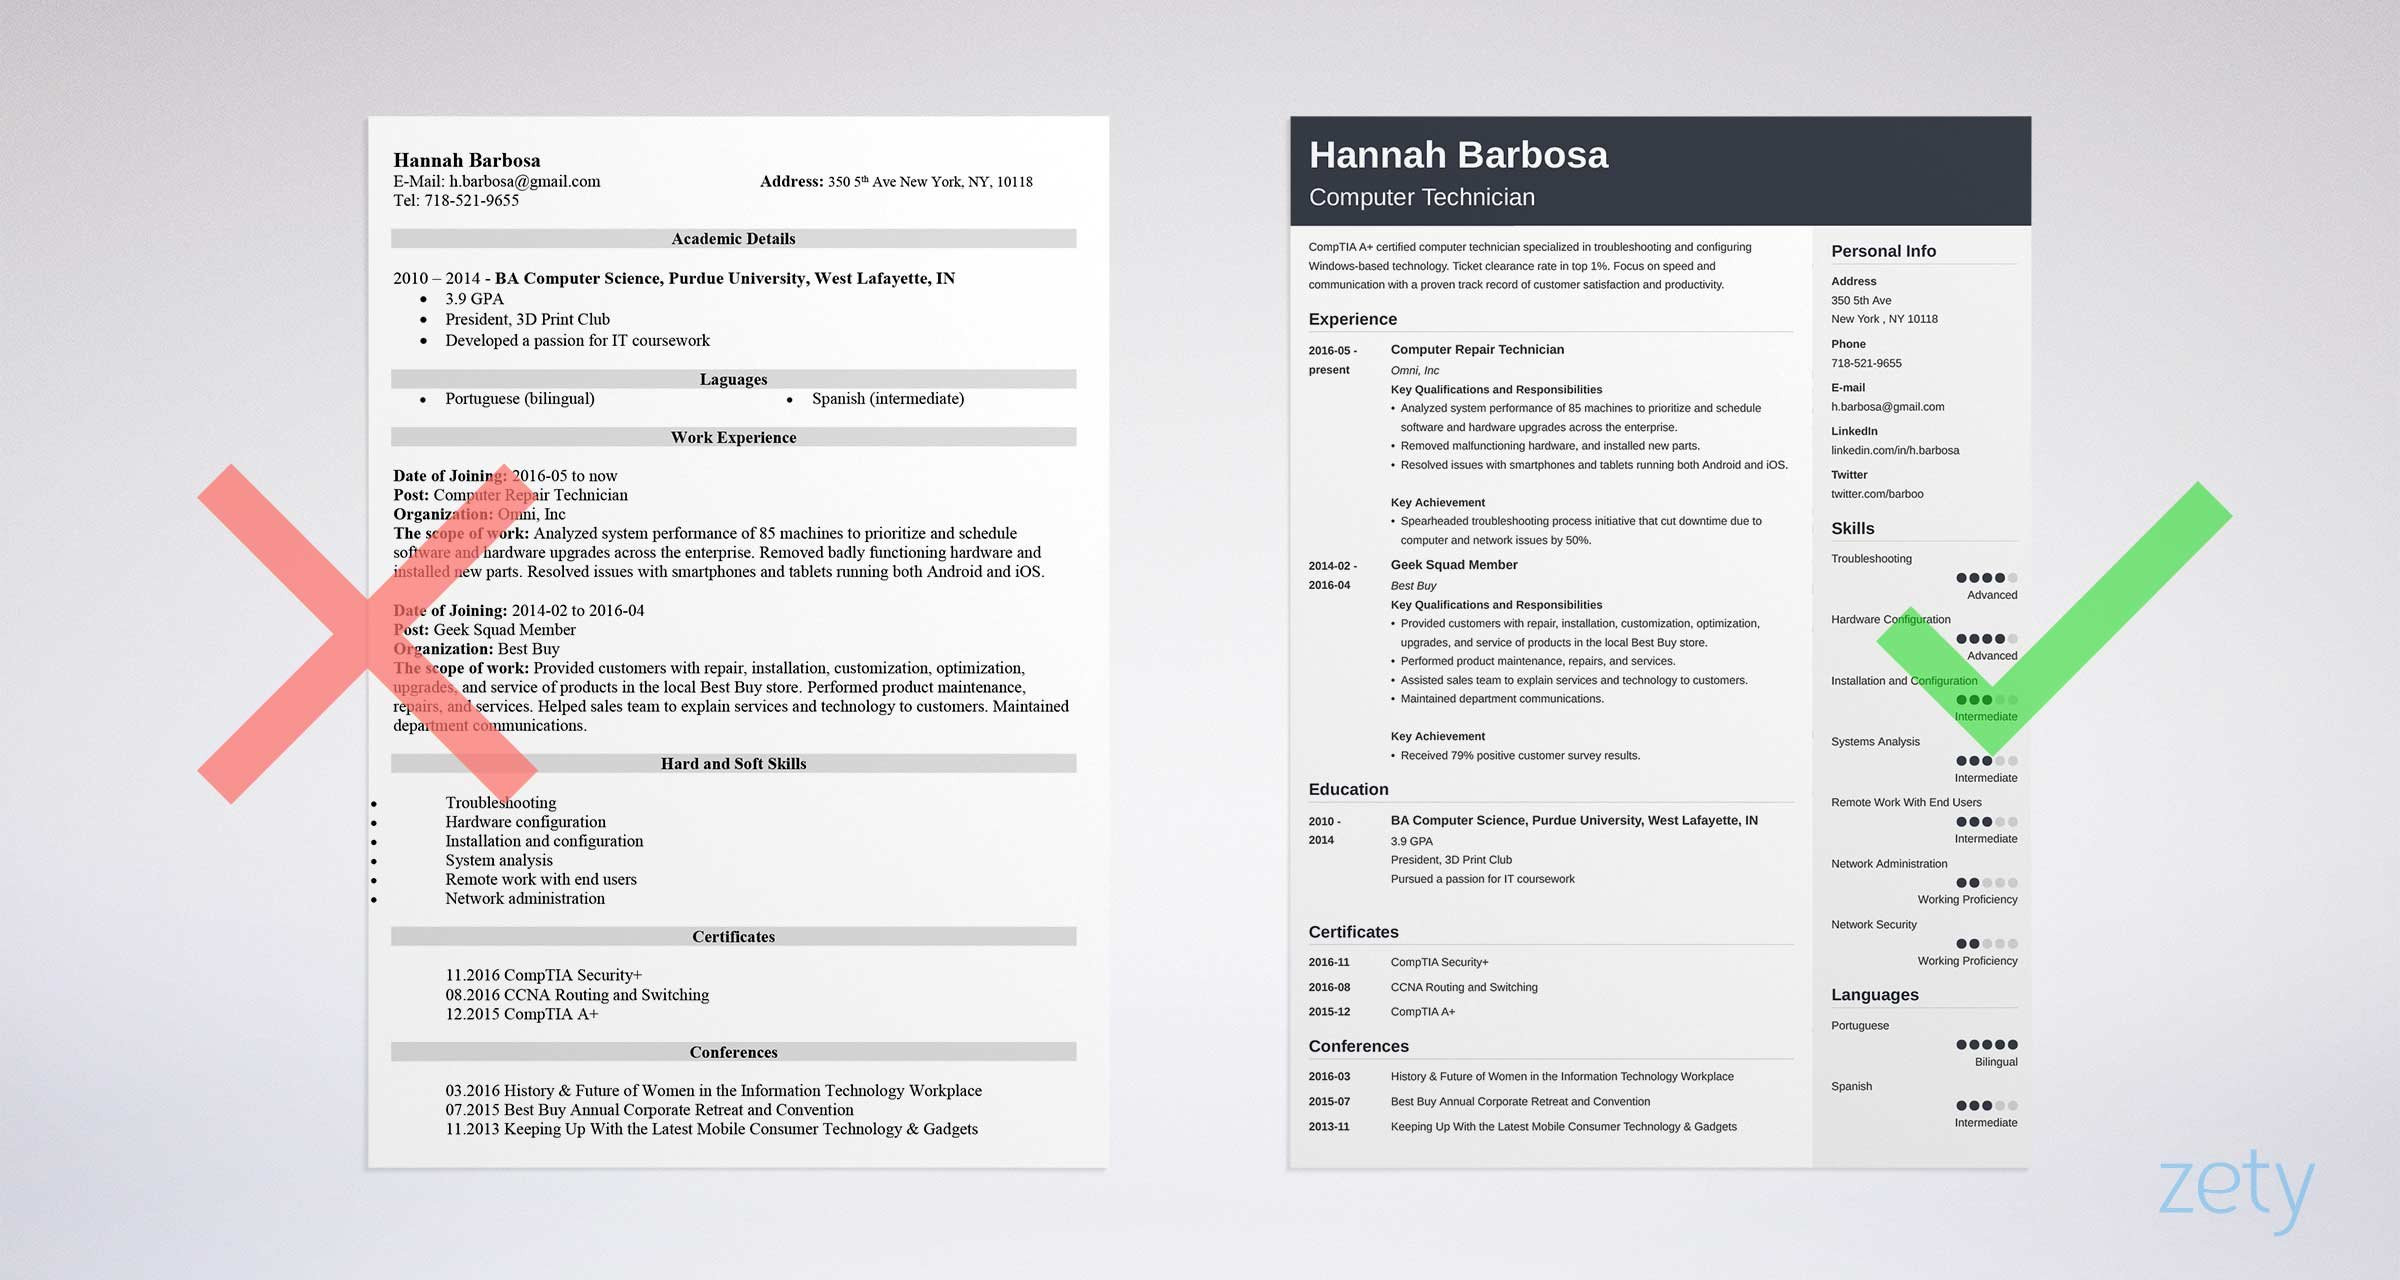 Self Employed Computer Technician Resume Sample Computer Technician Resume Sample & Job Description